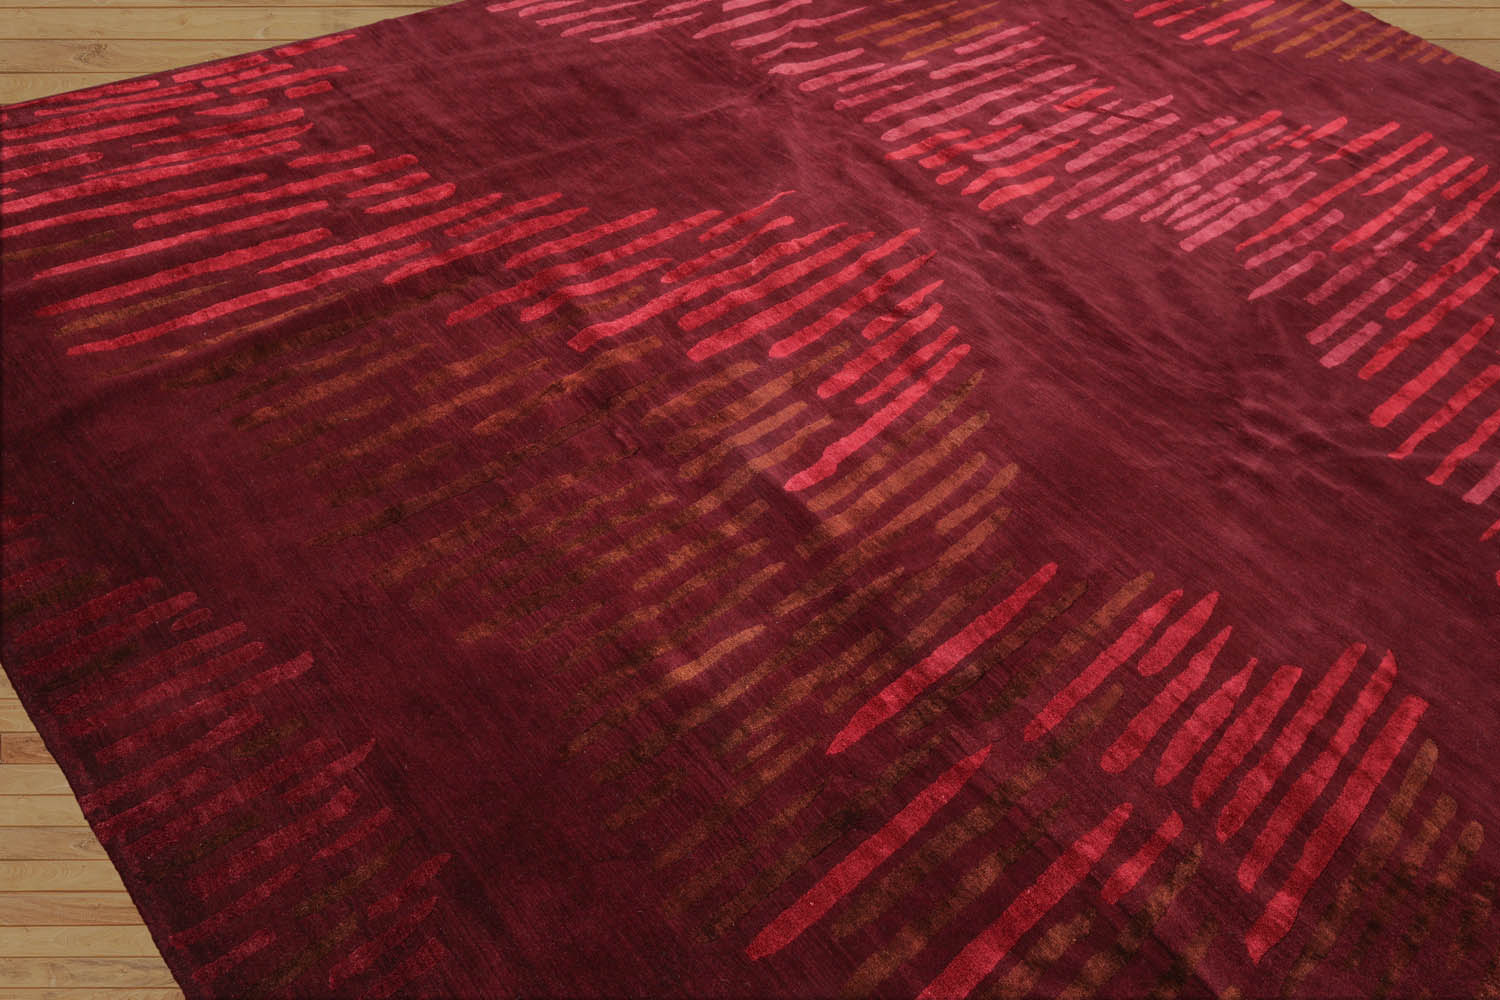 Lorenzen 9x12 Hand Knotted Tibetan Wool and Silk Mikhaelin Kohlberg Modern & Contemporary Oriental Area Rug Maroon, Burgundy Color